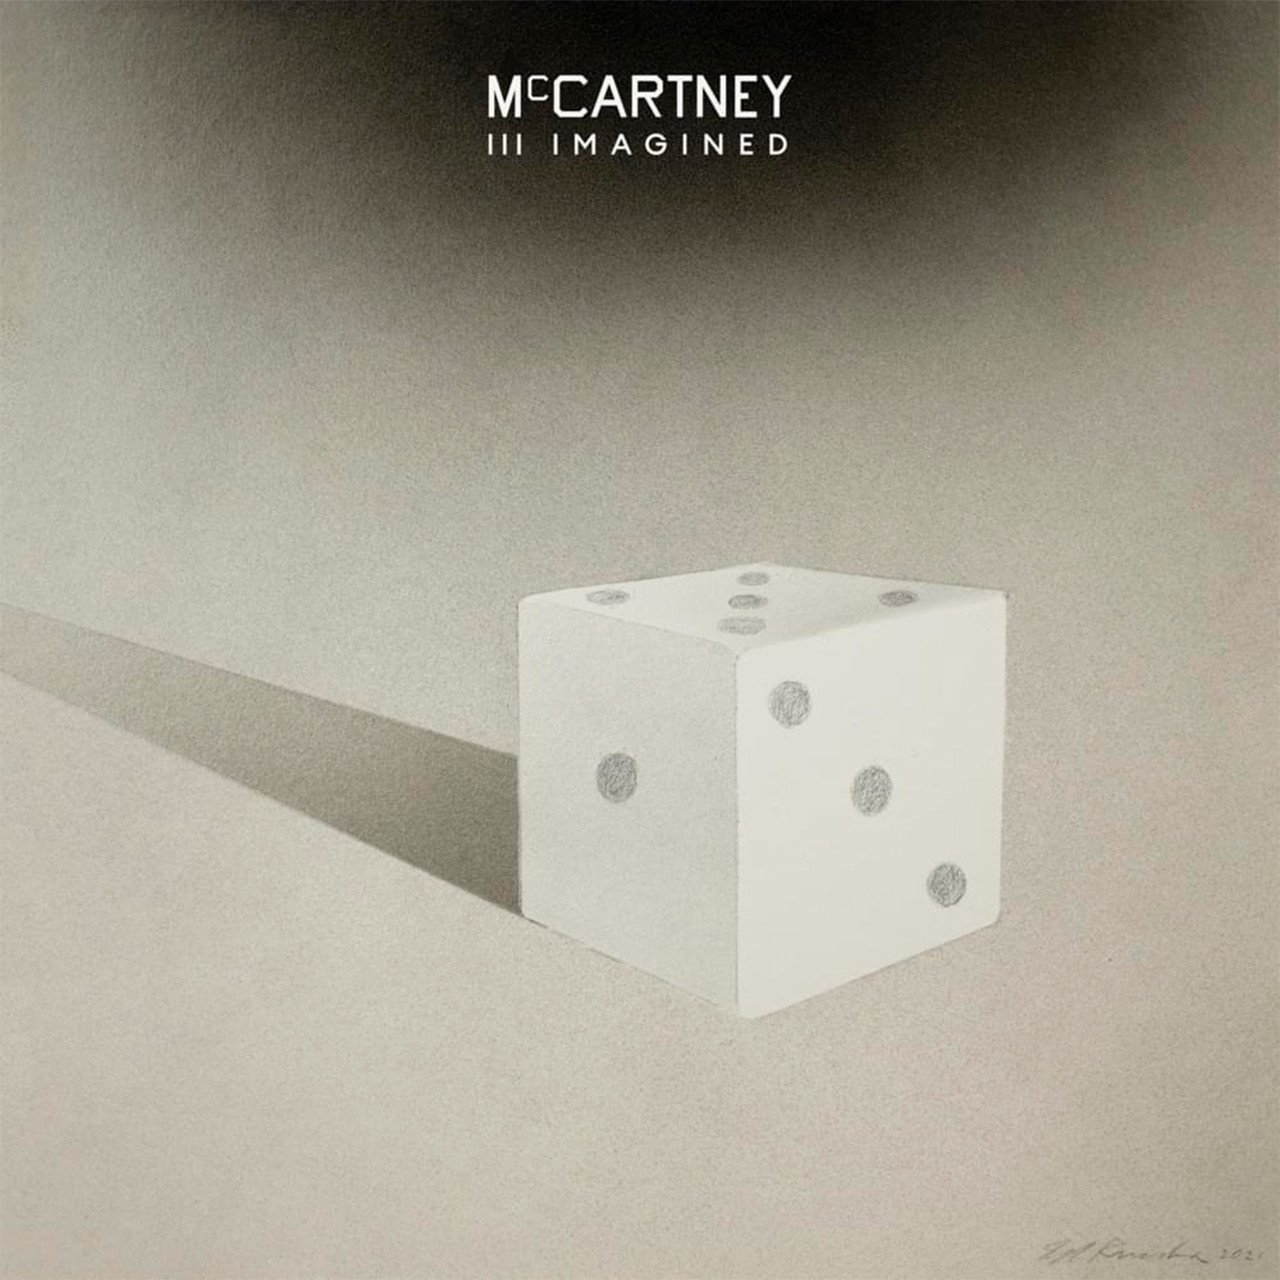 Рок Capitol US Paul McCartney - McCartney III Imagined рок ume usm paul mccartney amoeba gig 2lp